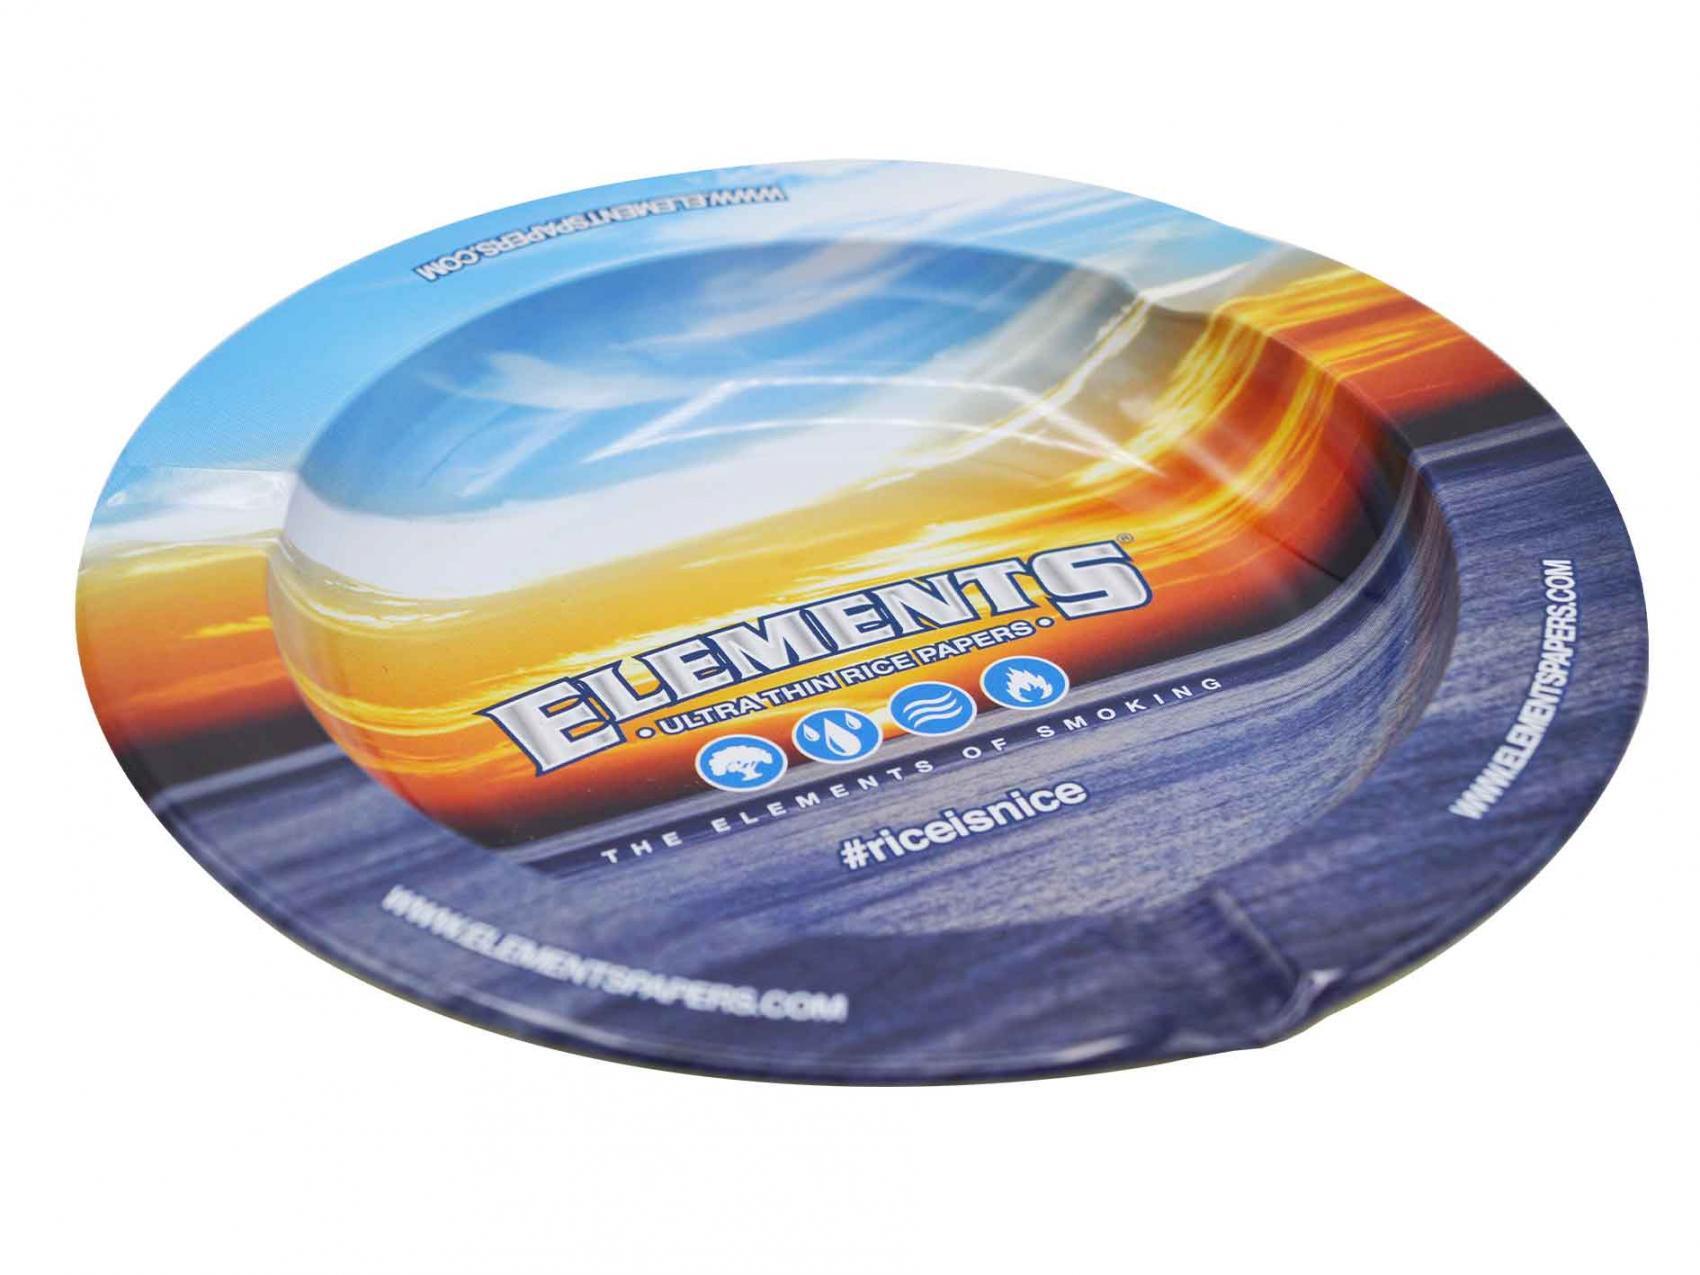 Elements - Aschenbecher Aluminium